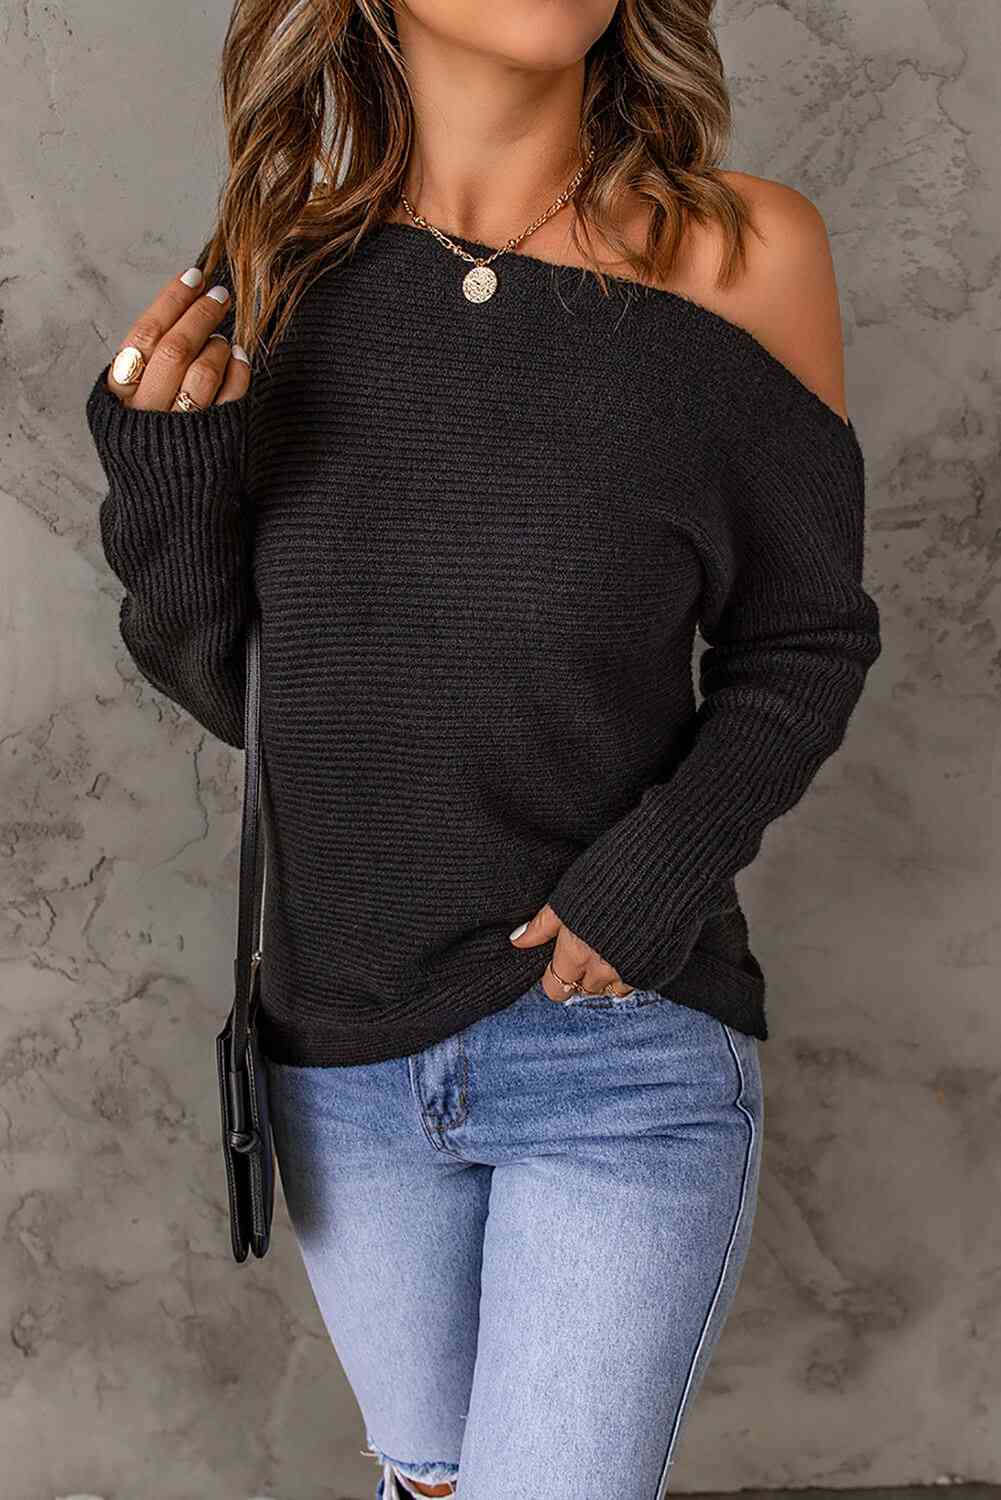 Double Take Horizontal Ribbing One-Shoulder Sweater